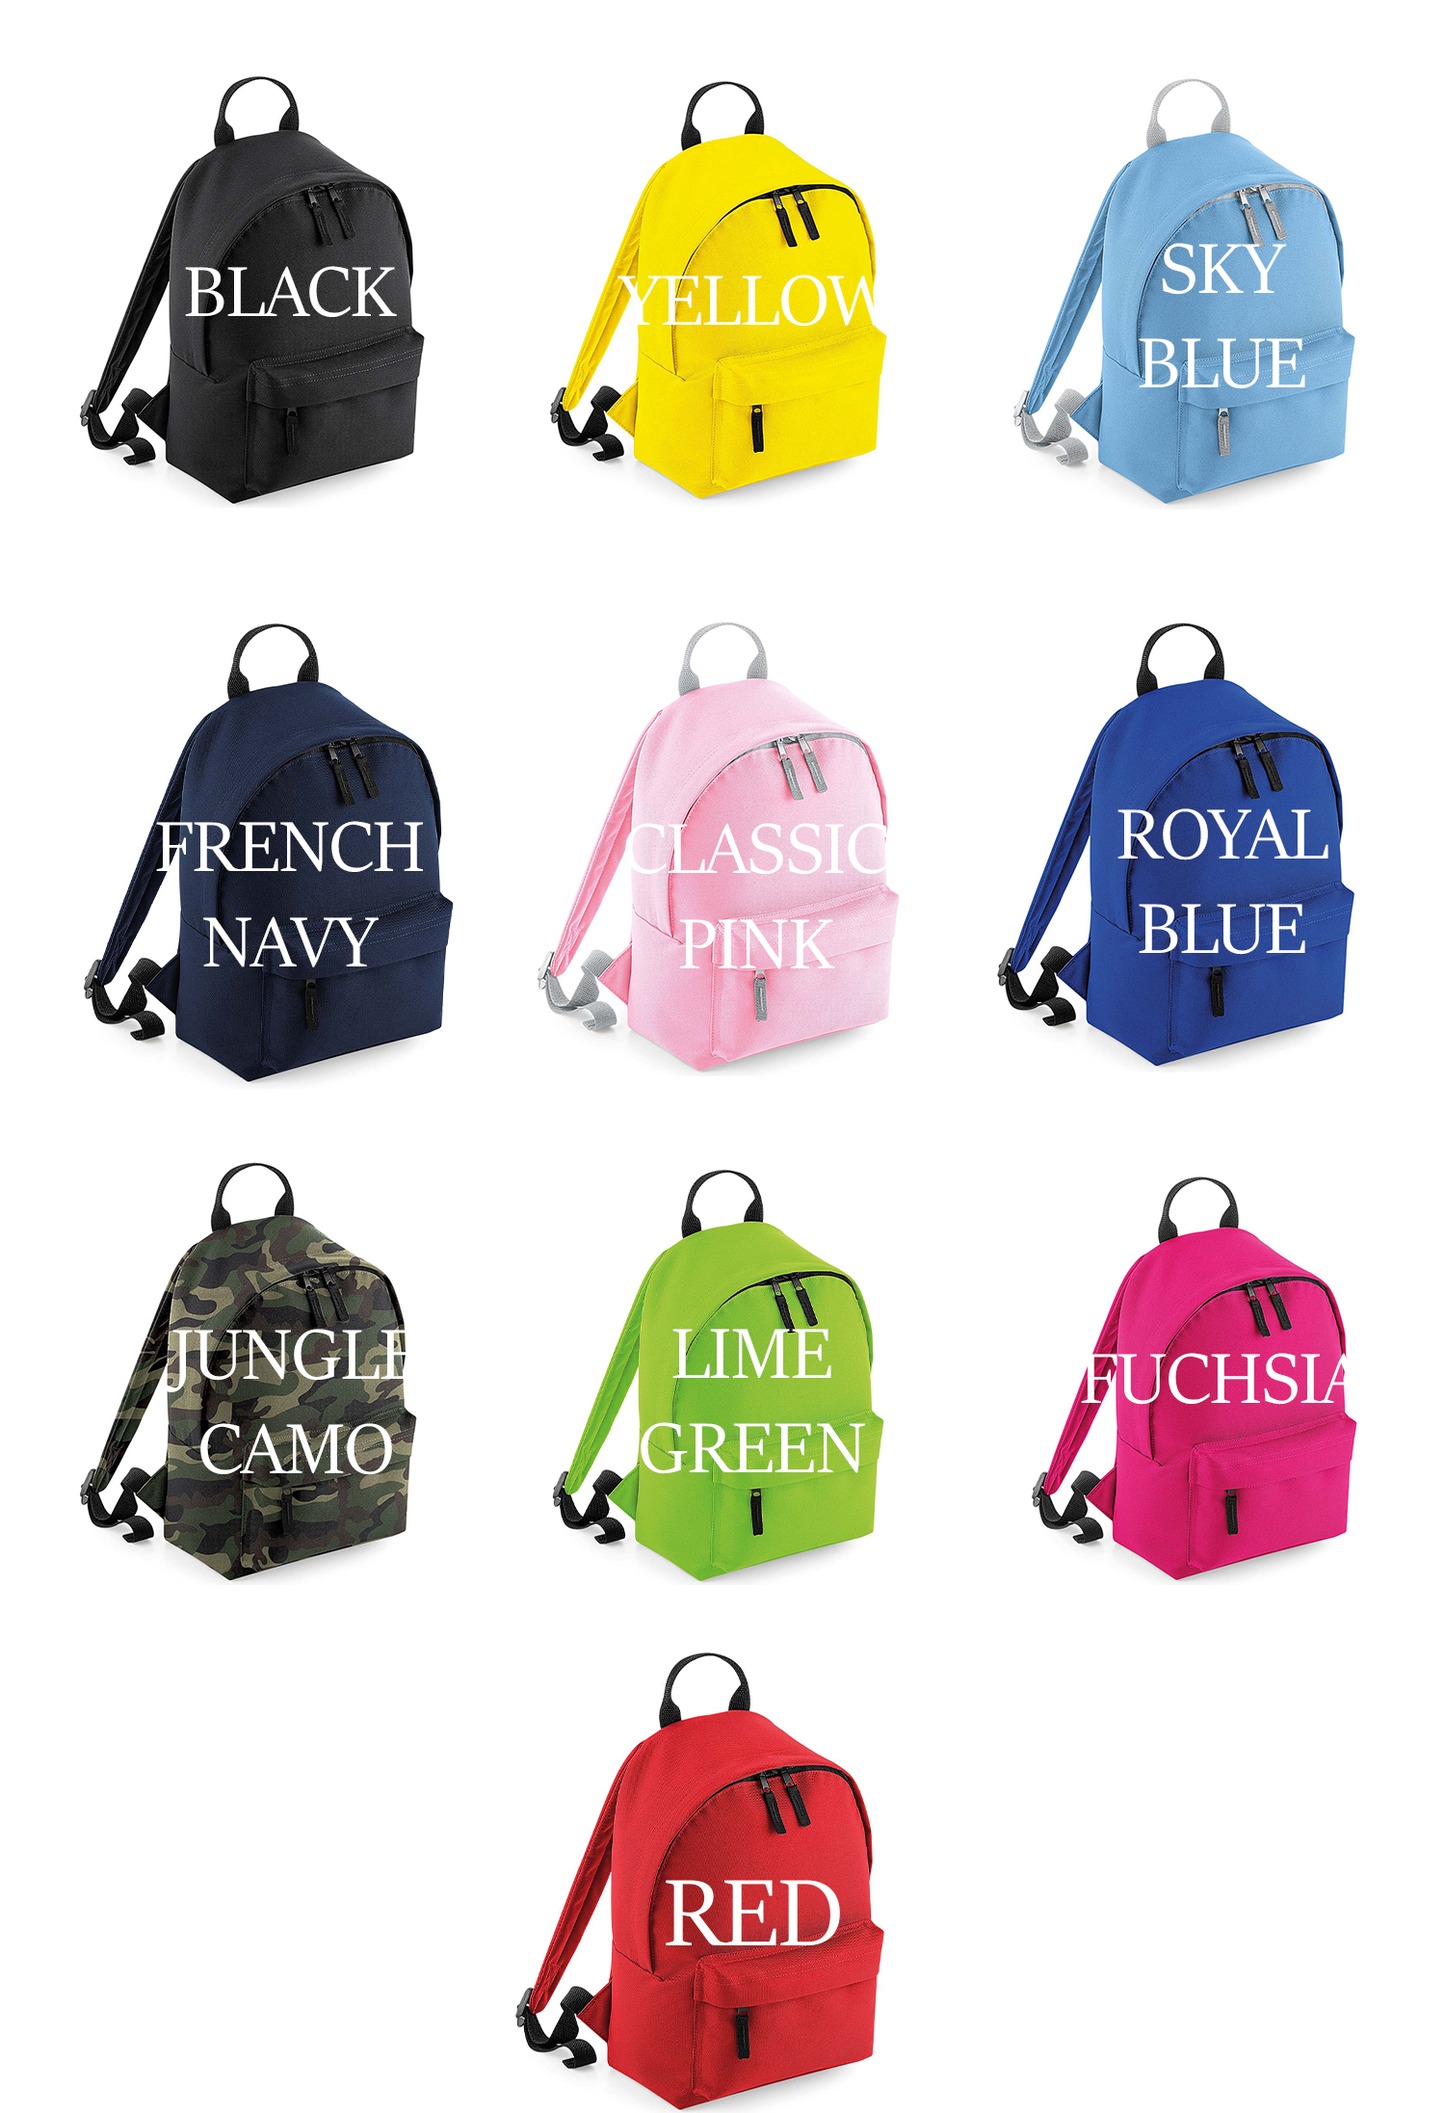 Create Your Own Mini Fashion Backpack